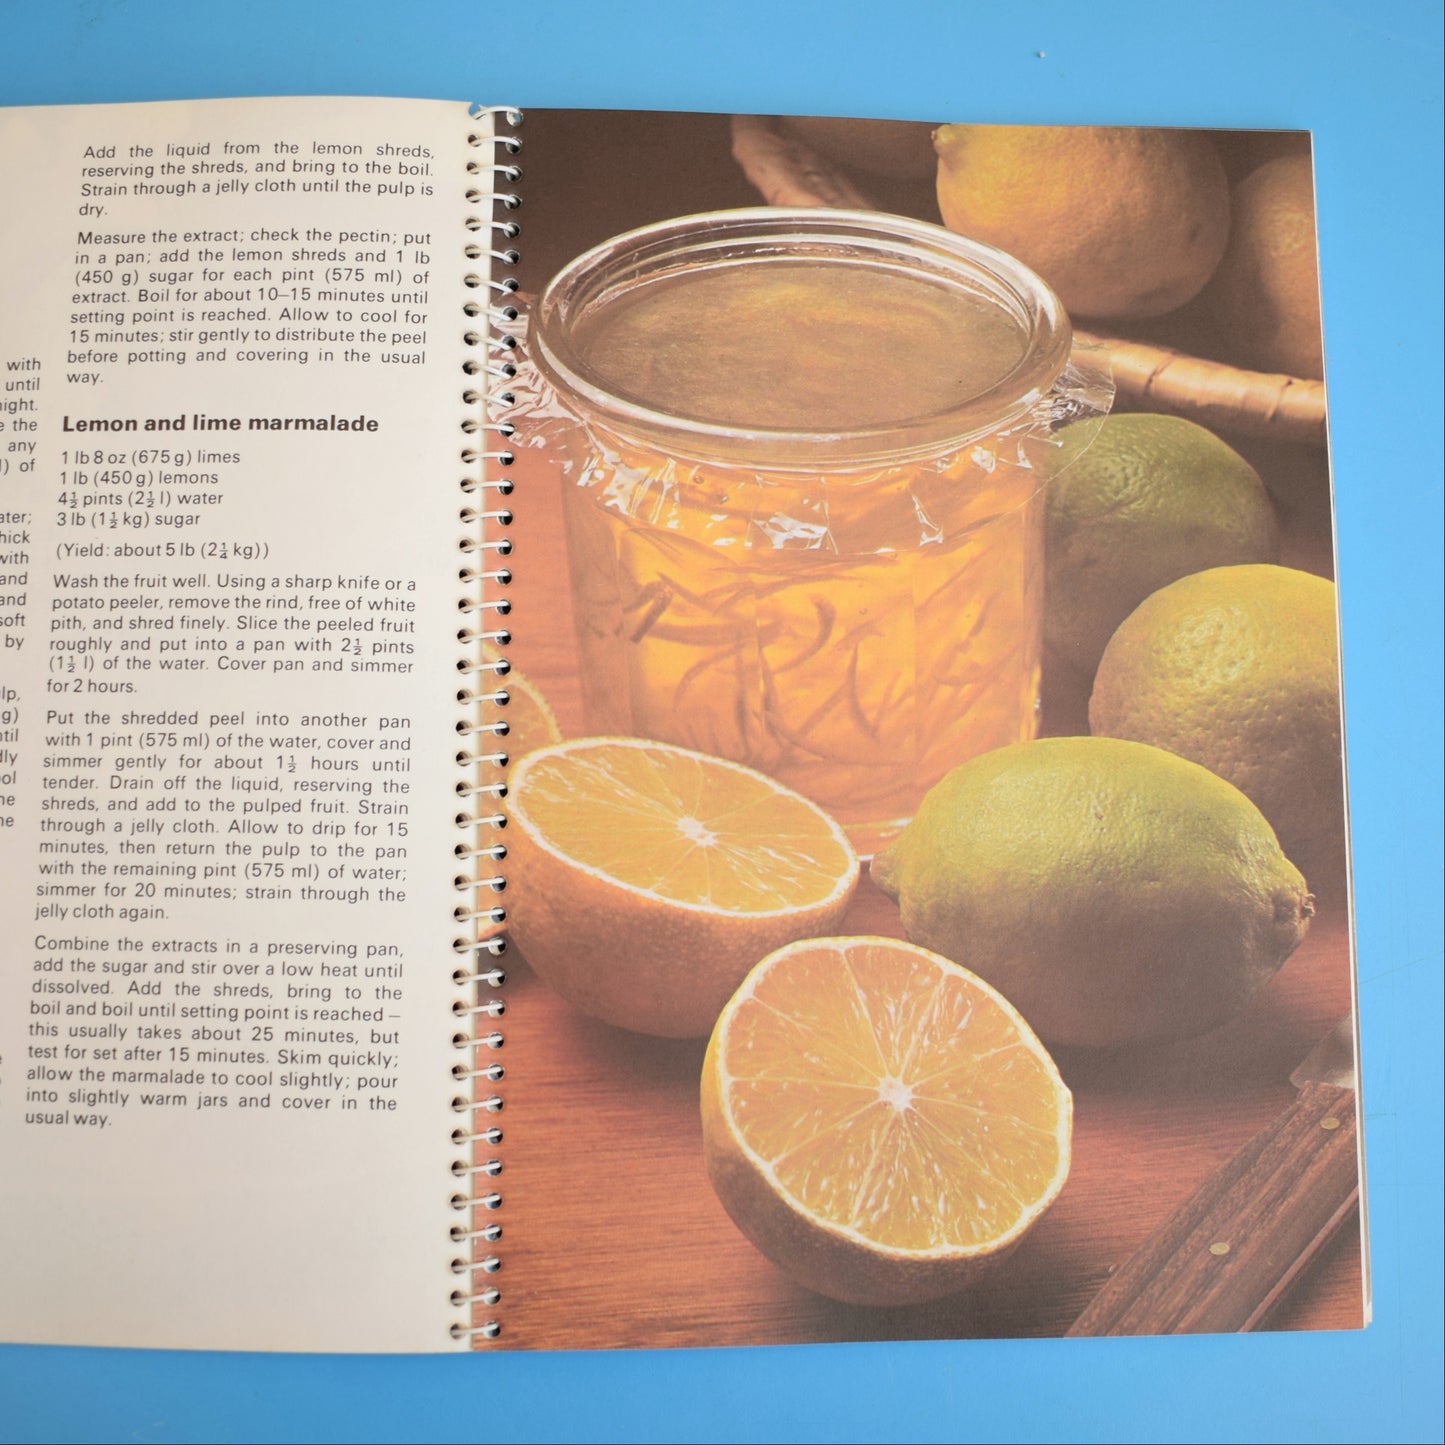 Vintage 1970s Jam & Preserve Recipe Book